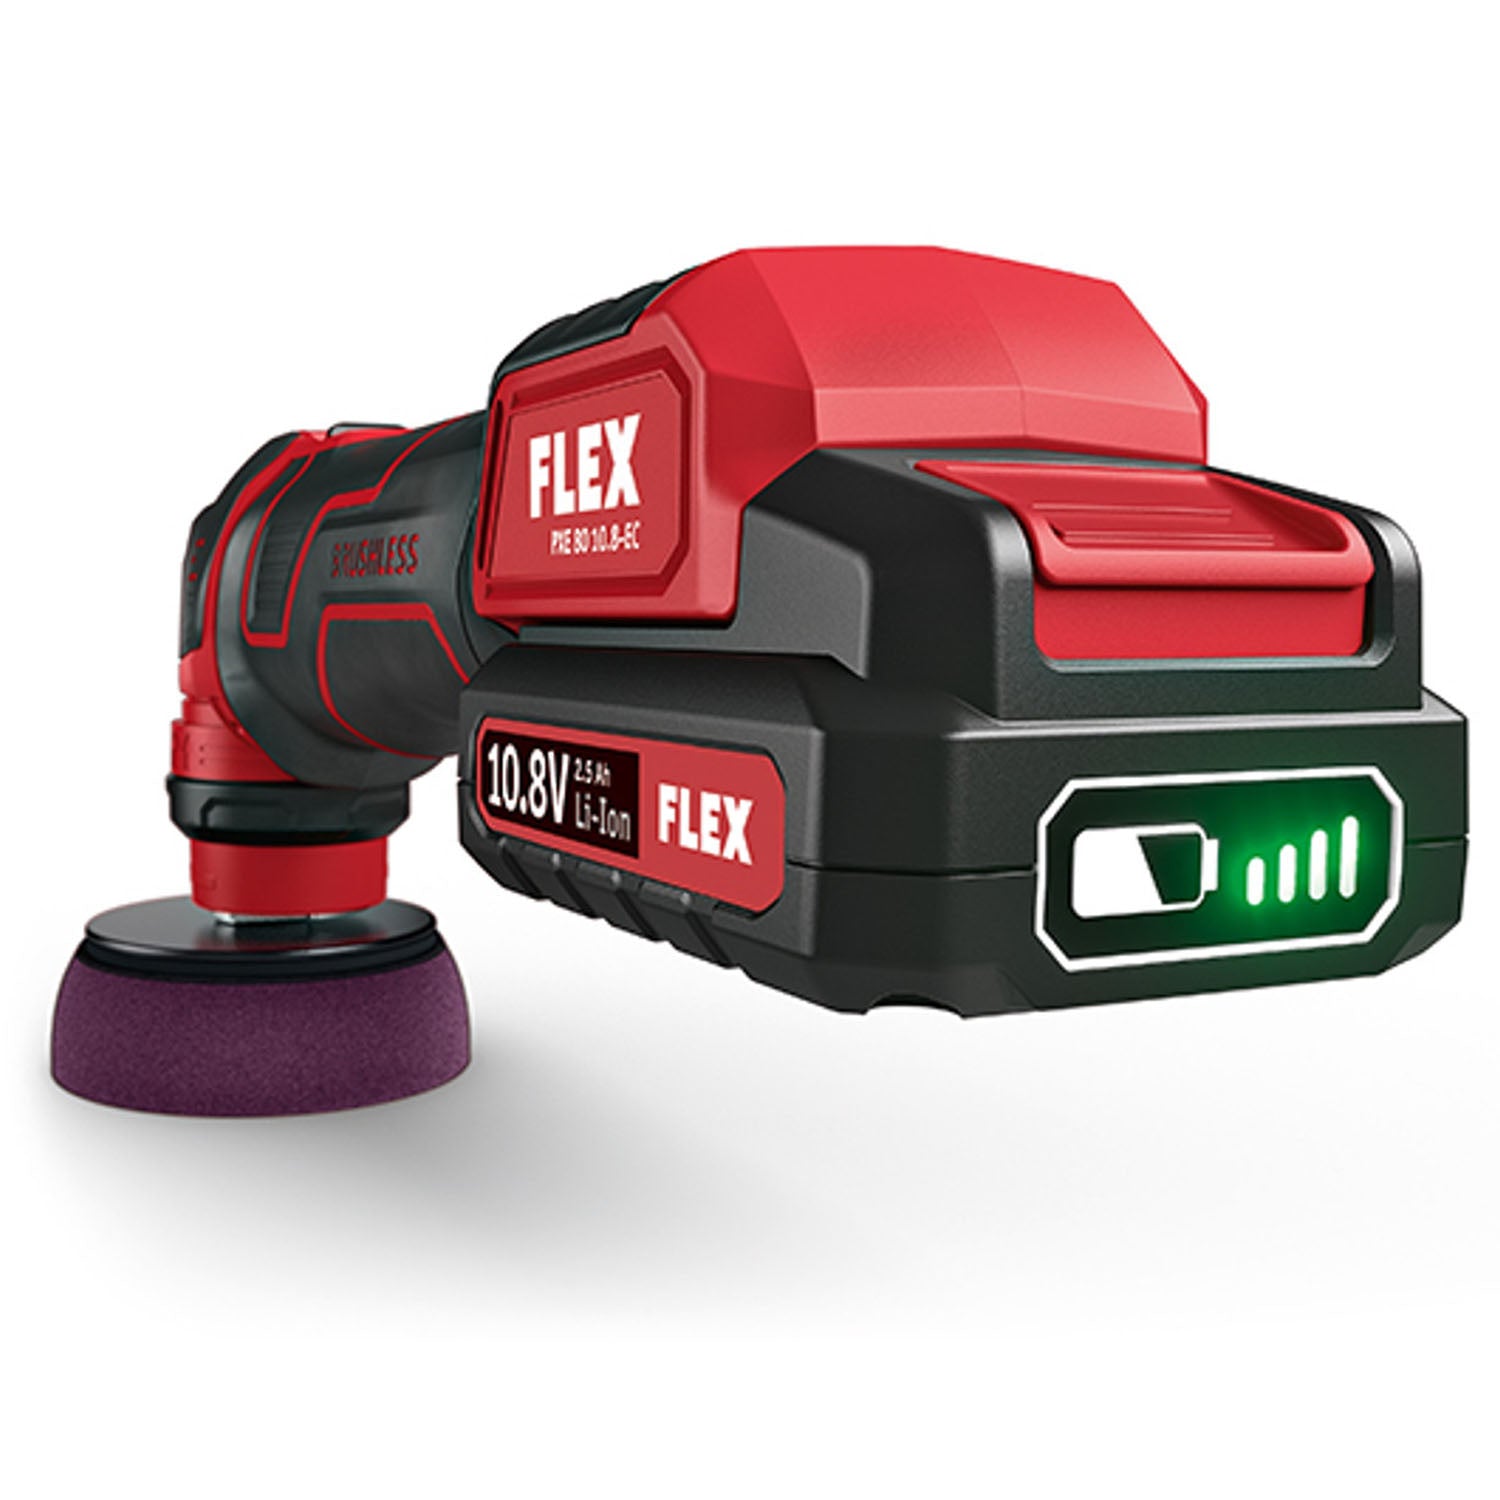 flex-pxe80-cordless-polisher-battery-look